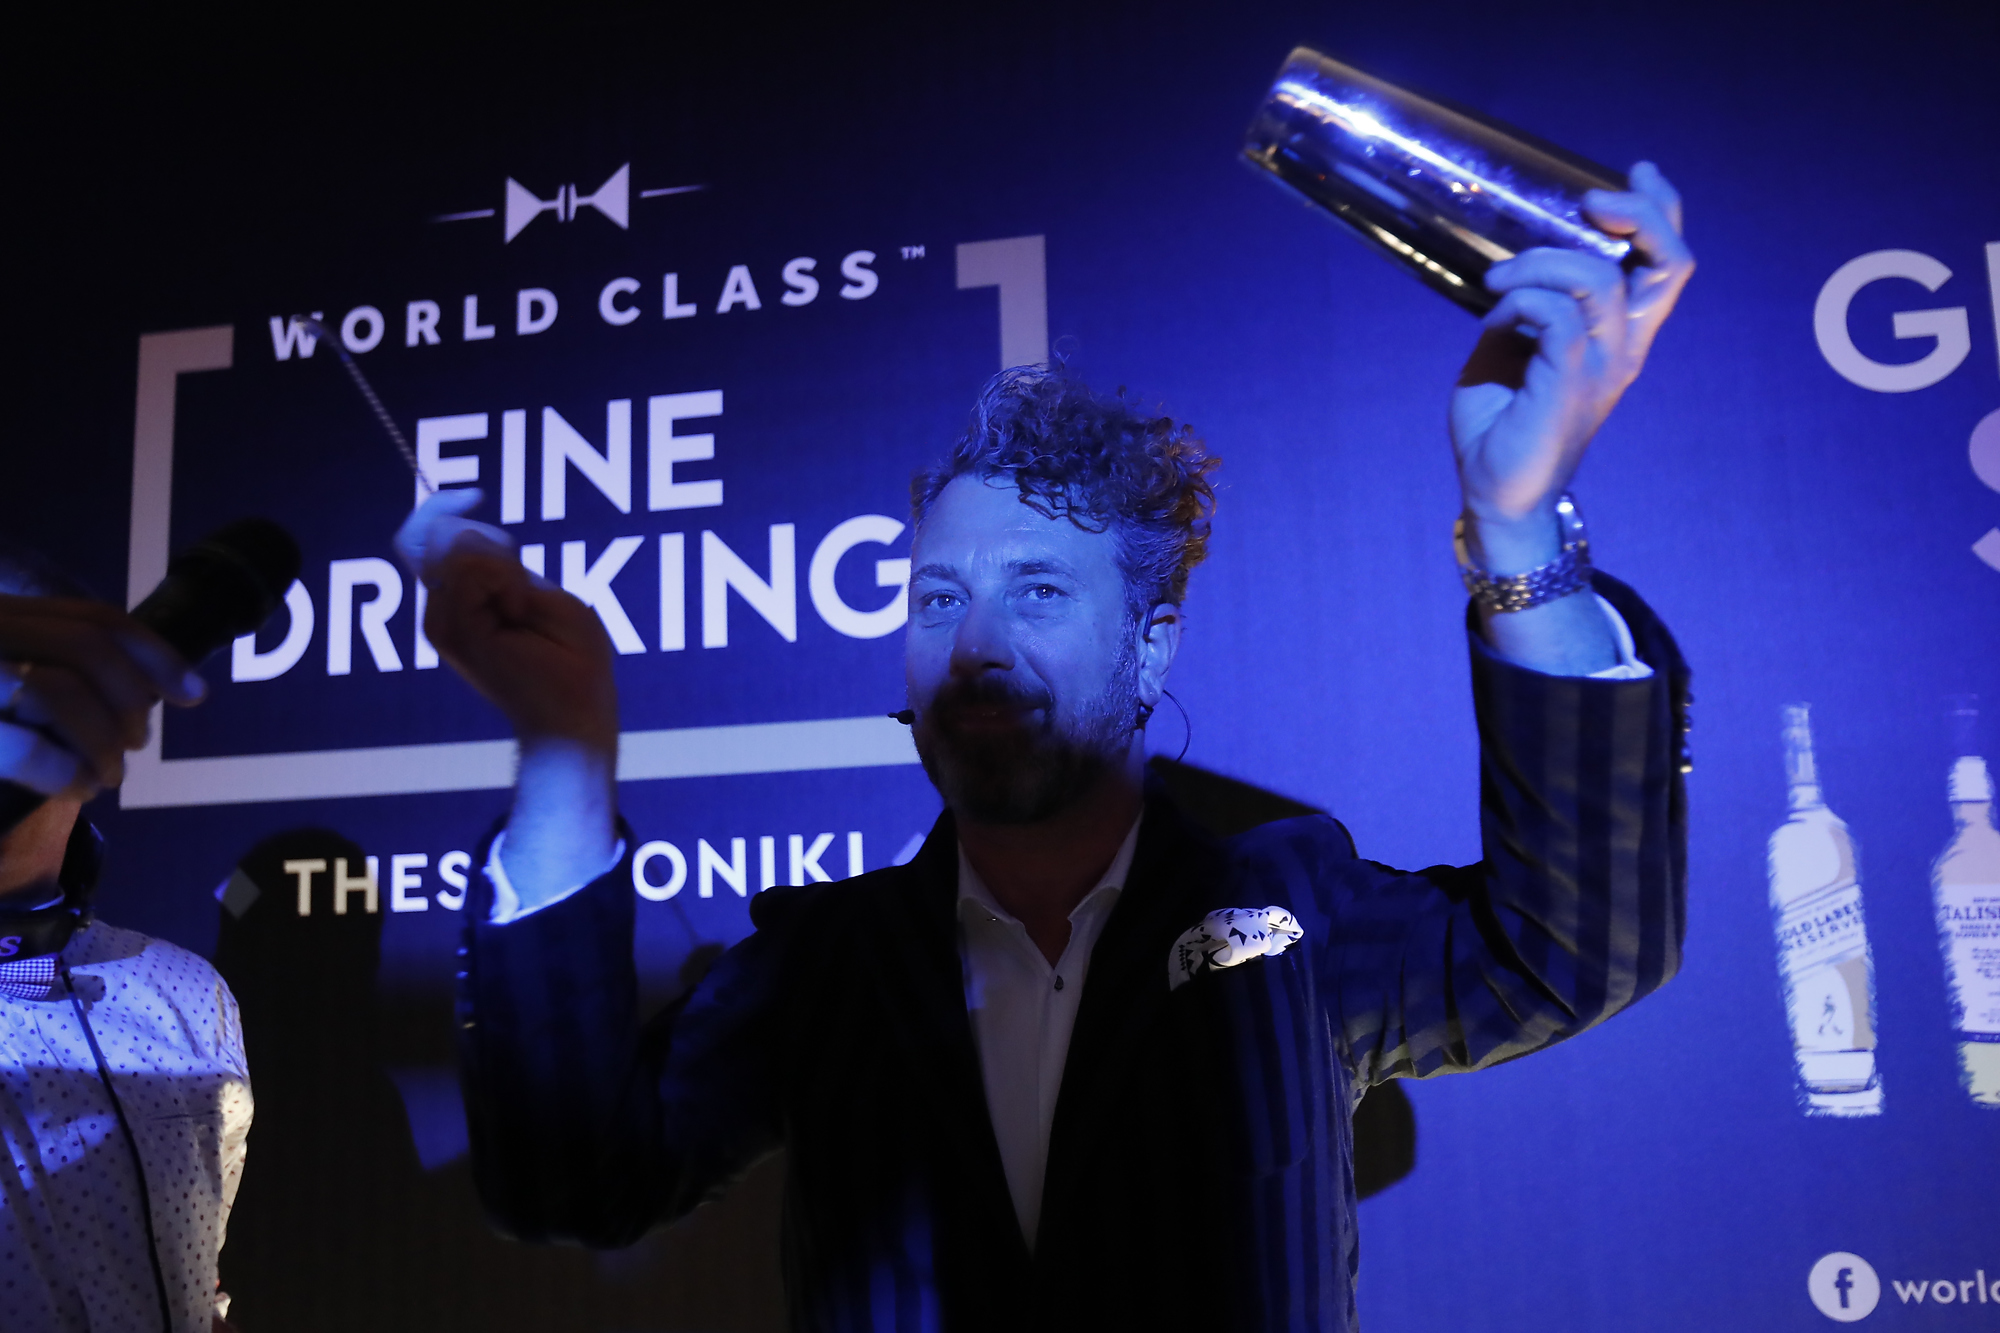 World Class Fine Drinking